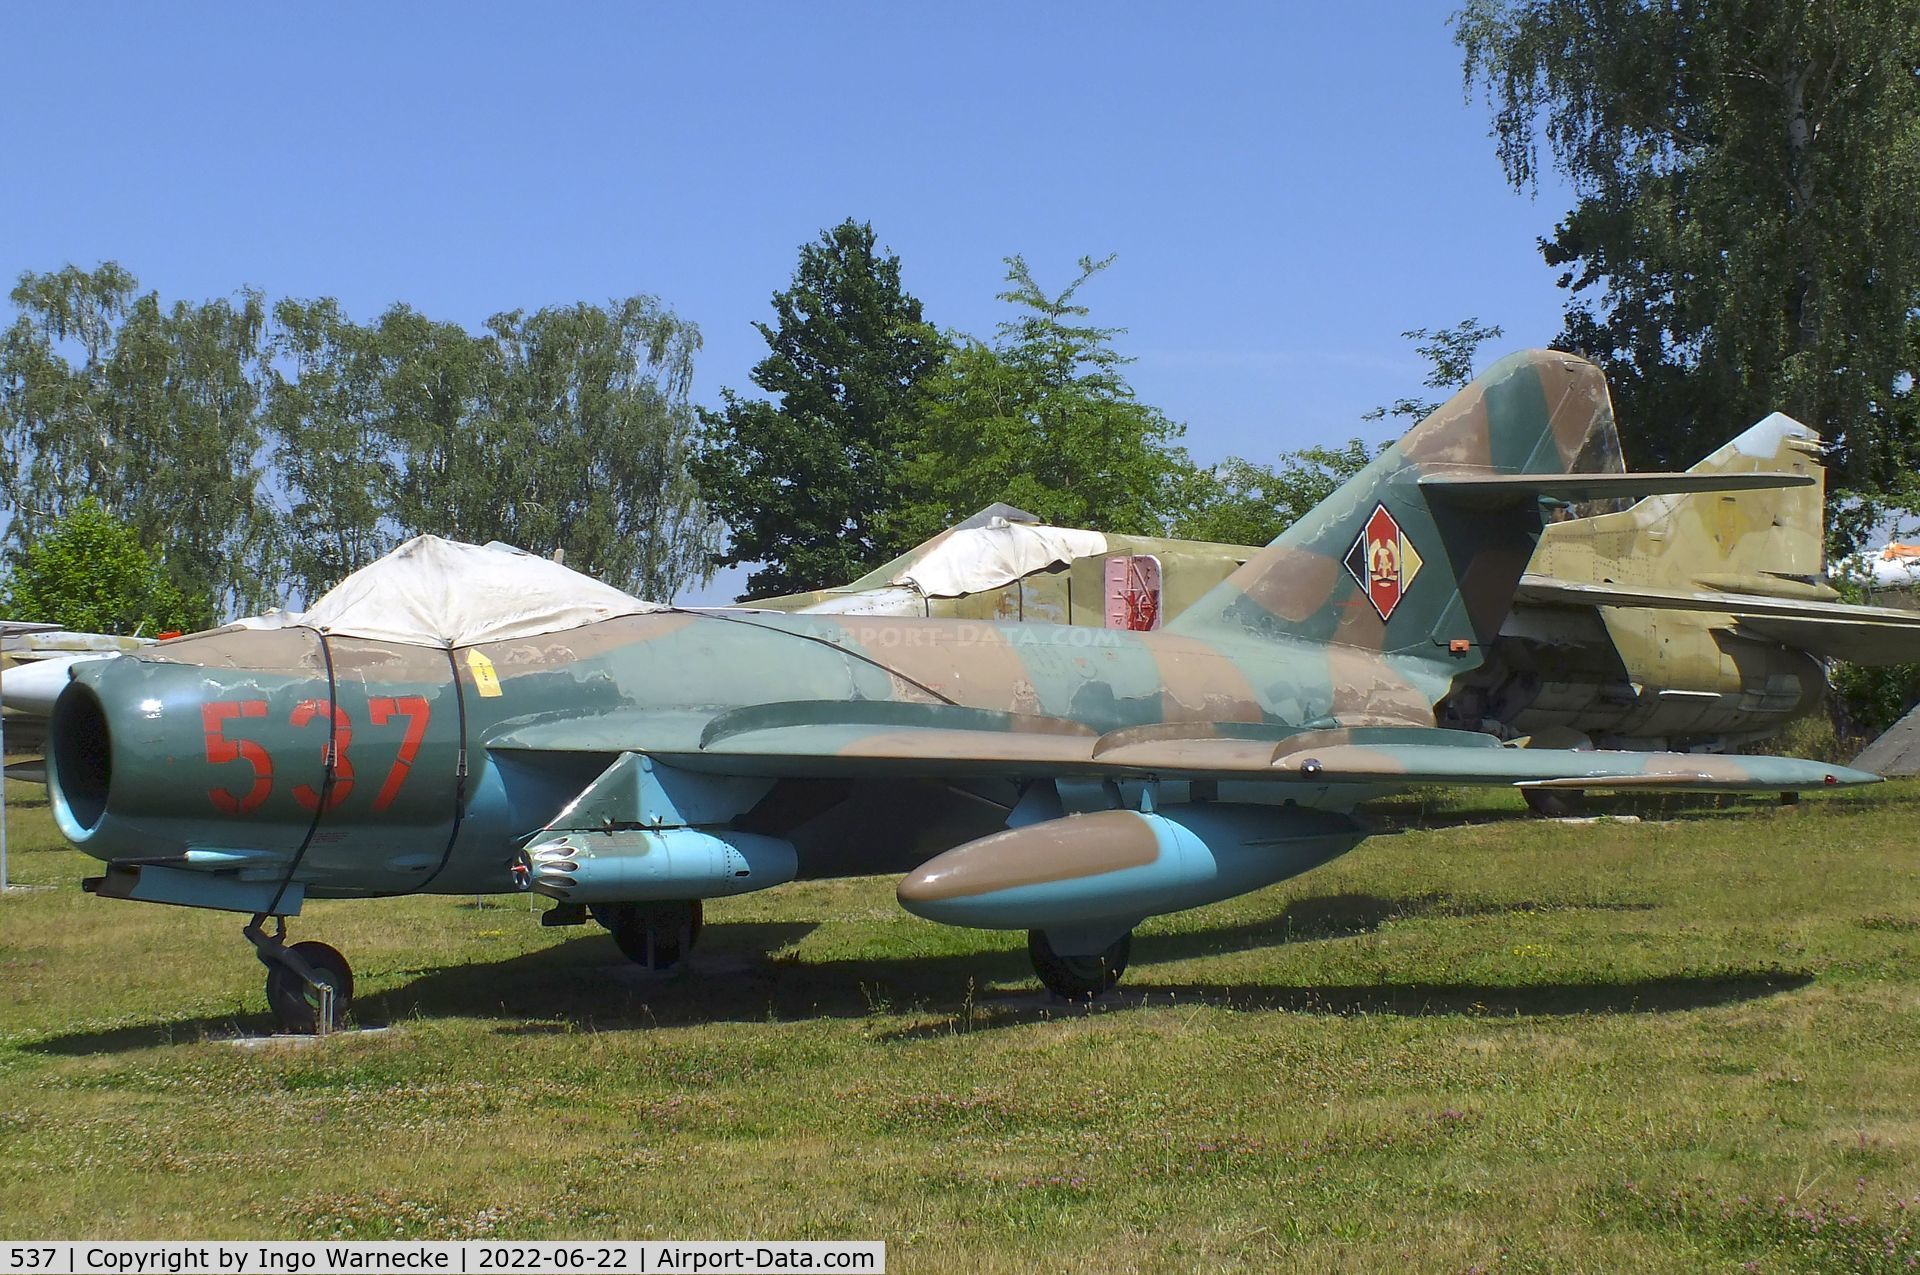 537, 1958 WSK Mielec Lim-5 MiG-17F C/N 1C 09-17, PZL-Mielec Lim-5 (MiG-17F) FRESCO-C at the Flugplatzmuseum Cottbus (Cottbus airfield museum)